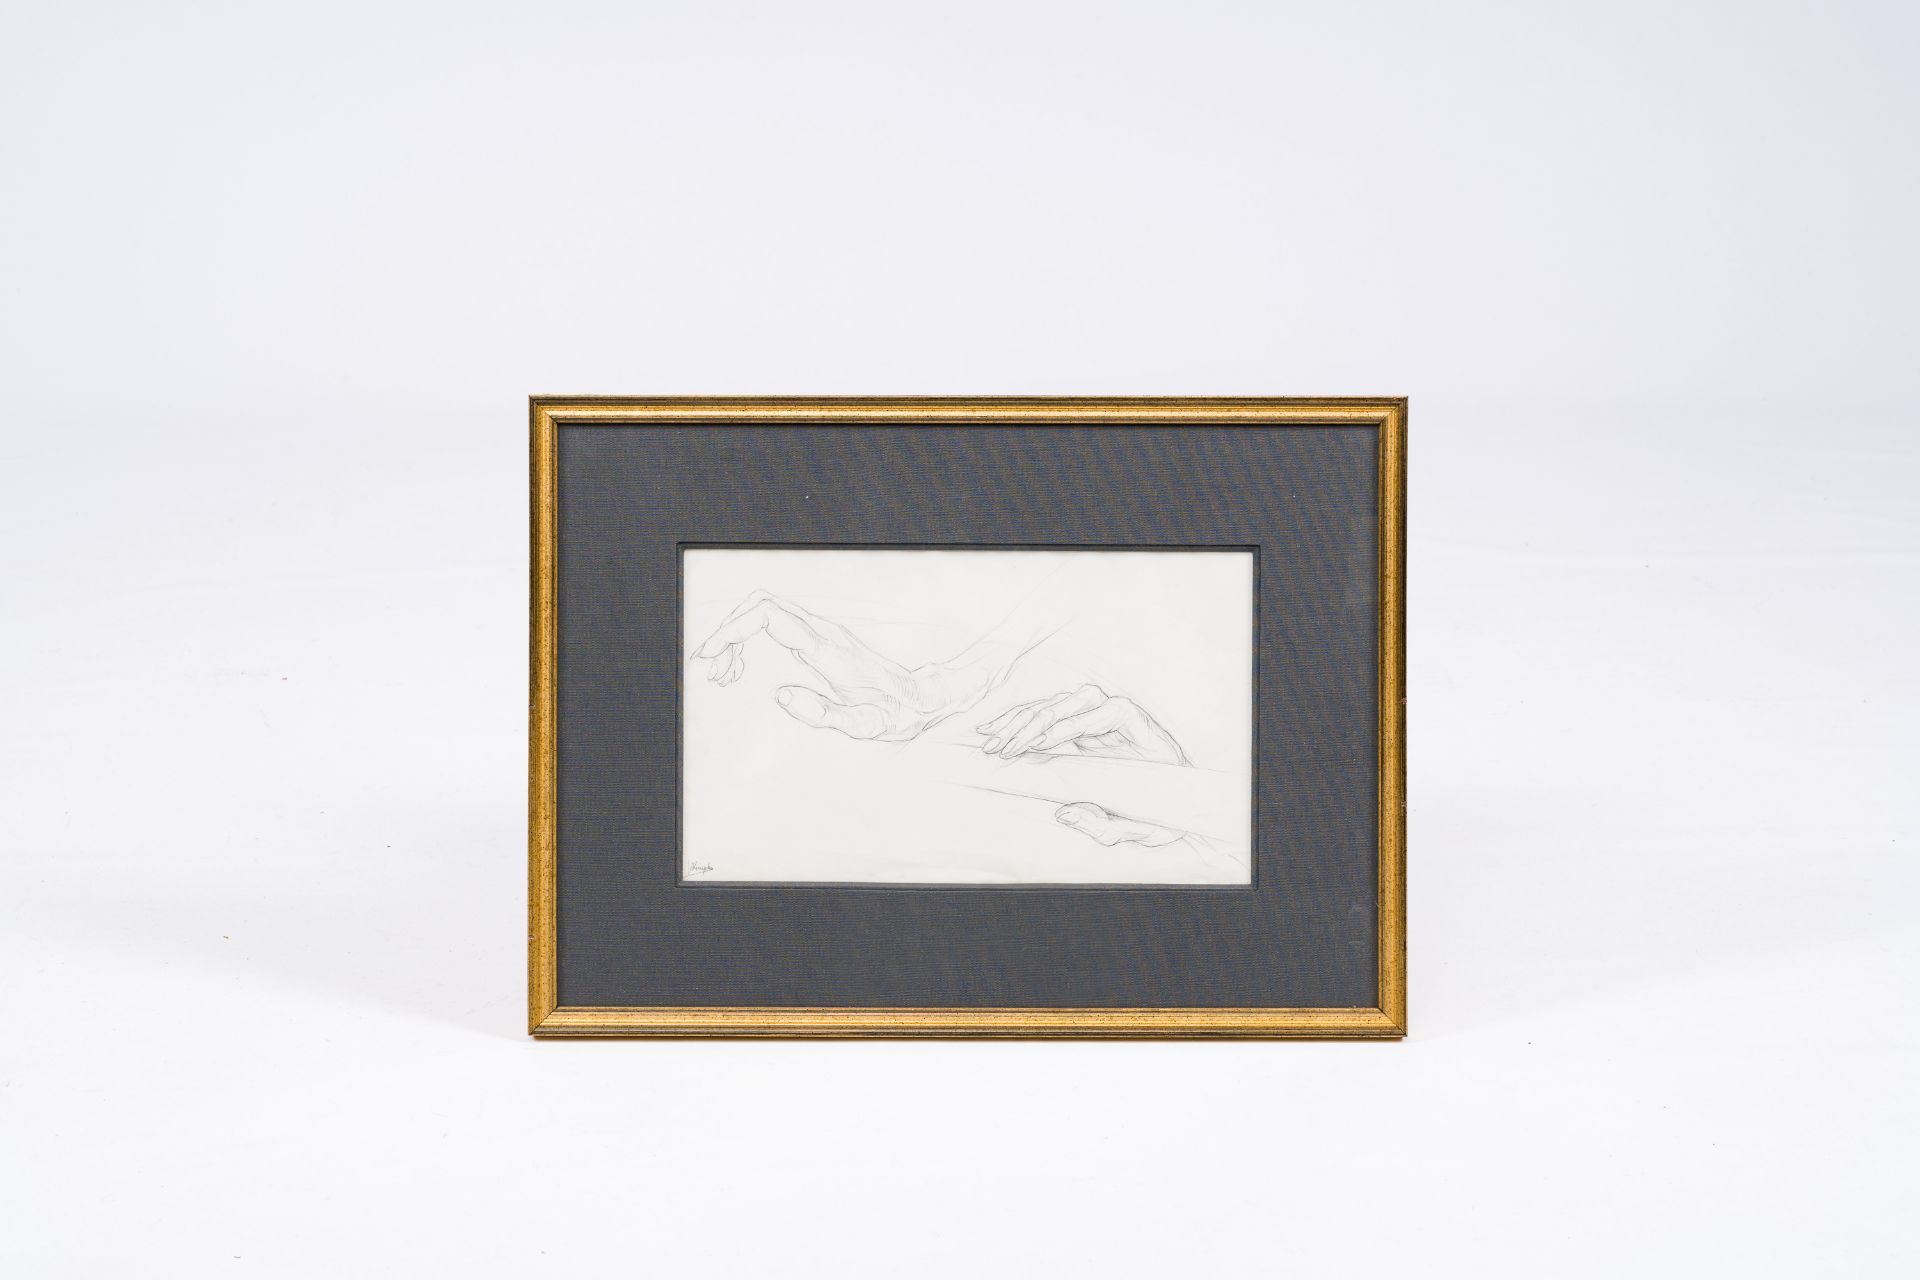 Jules De Bruycker (1870-1945): Hand studies, pencil on paper - Image 2 of 4